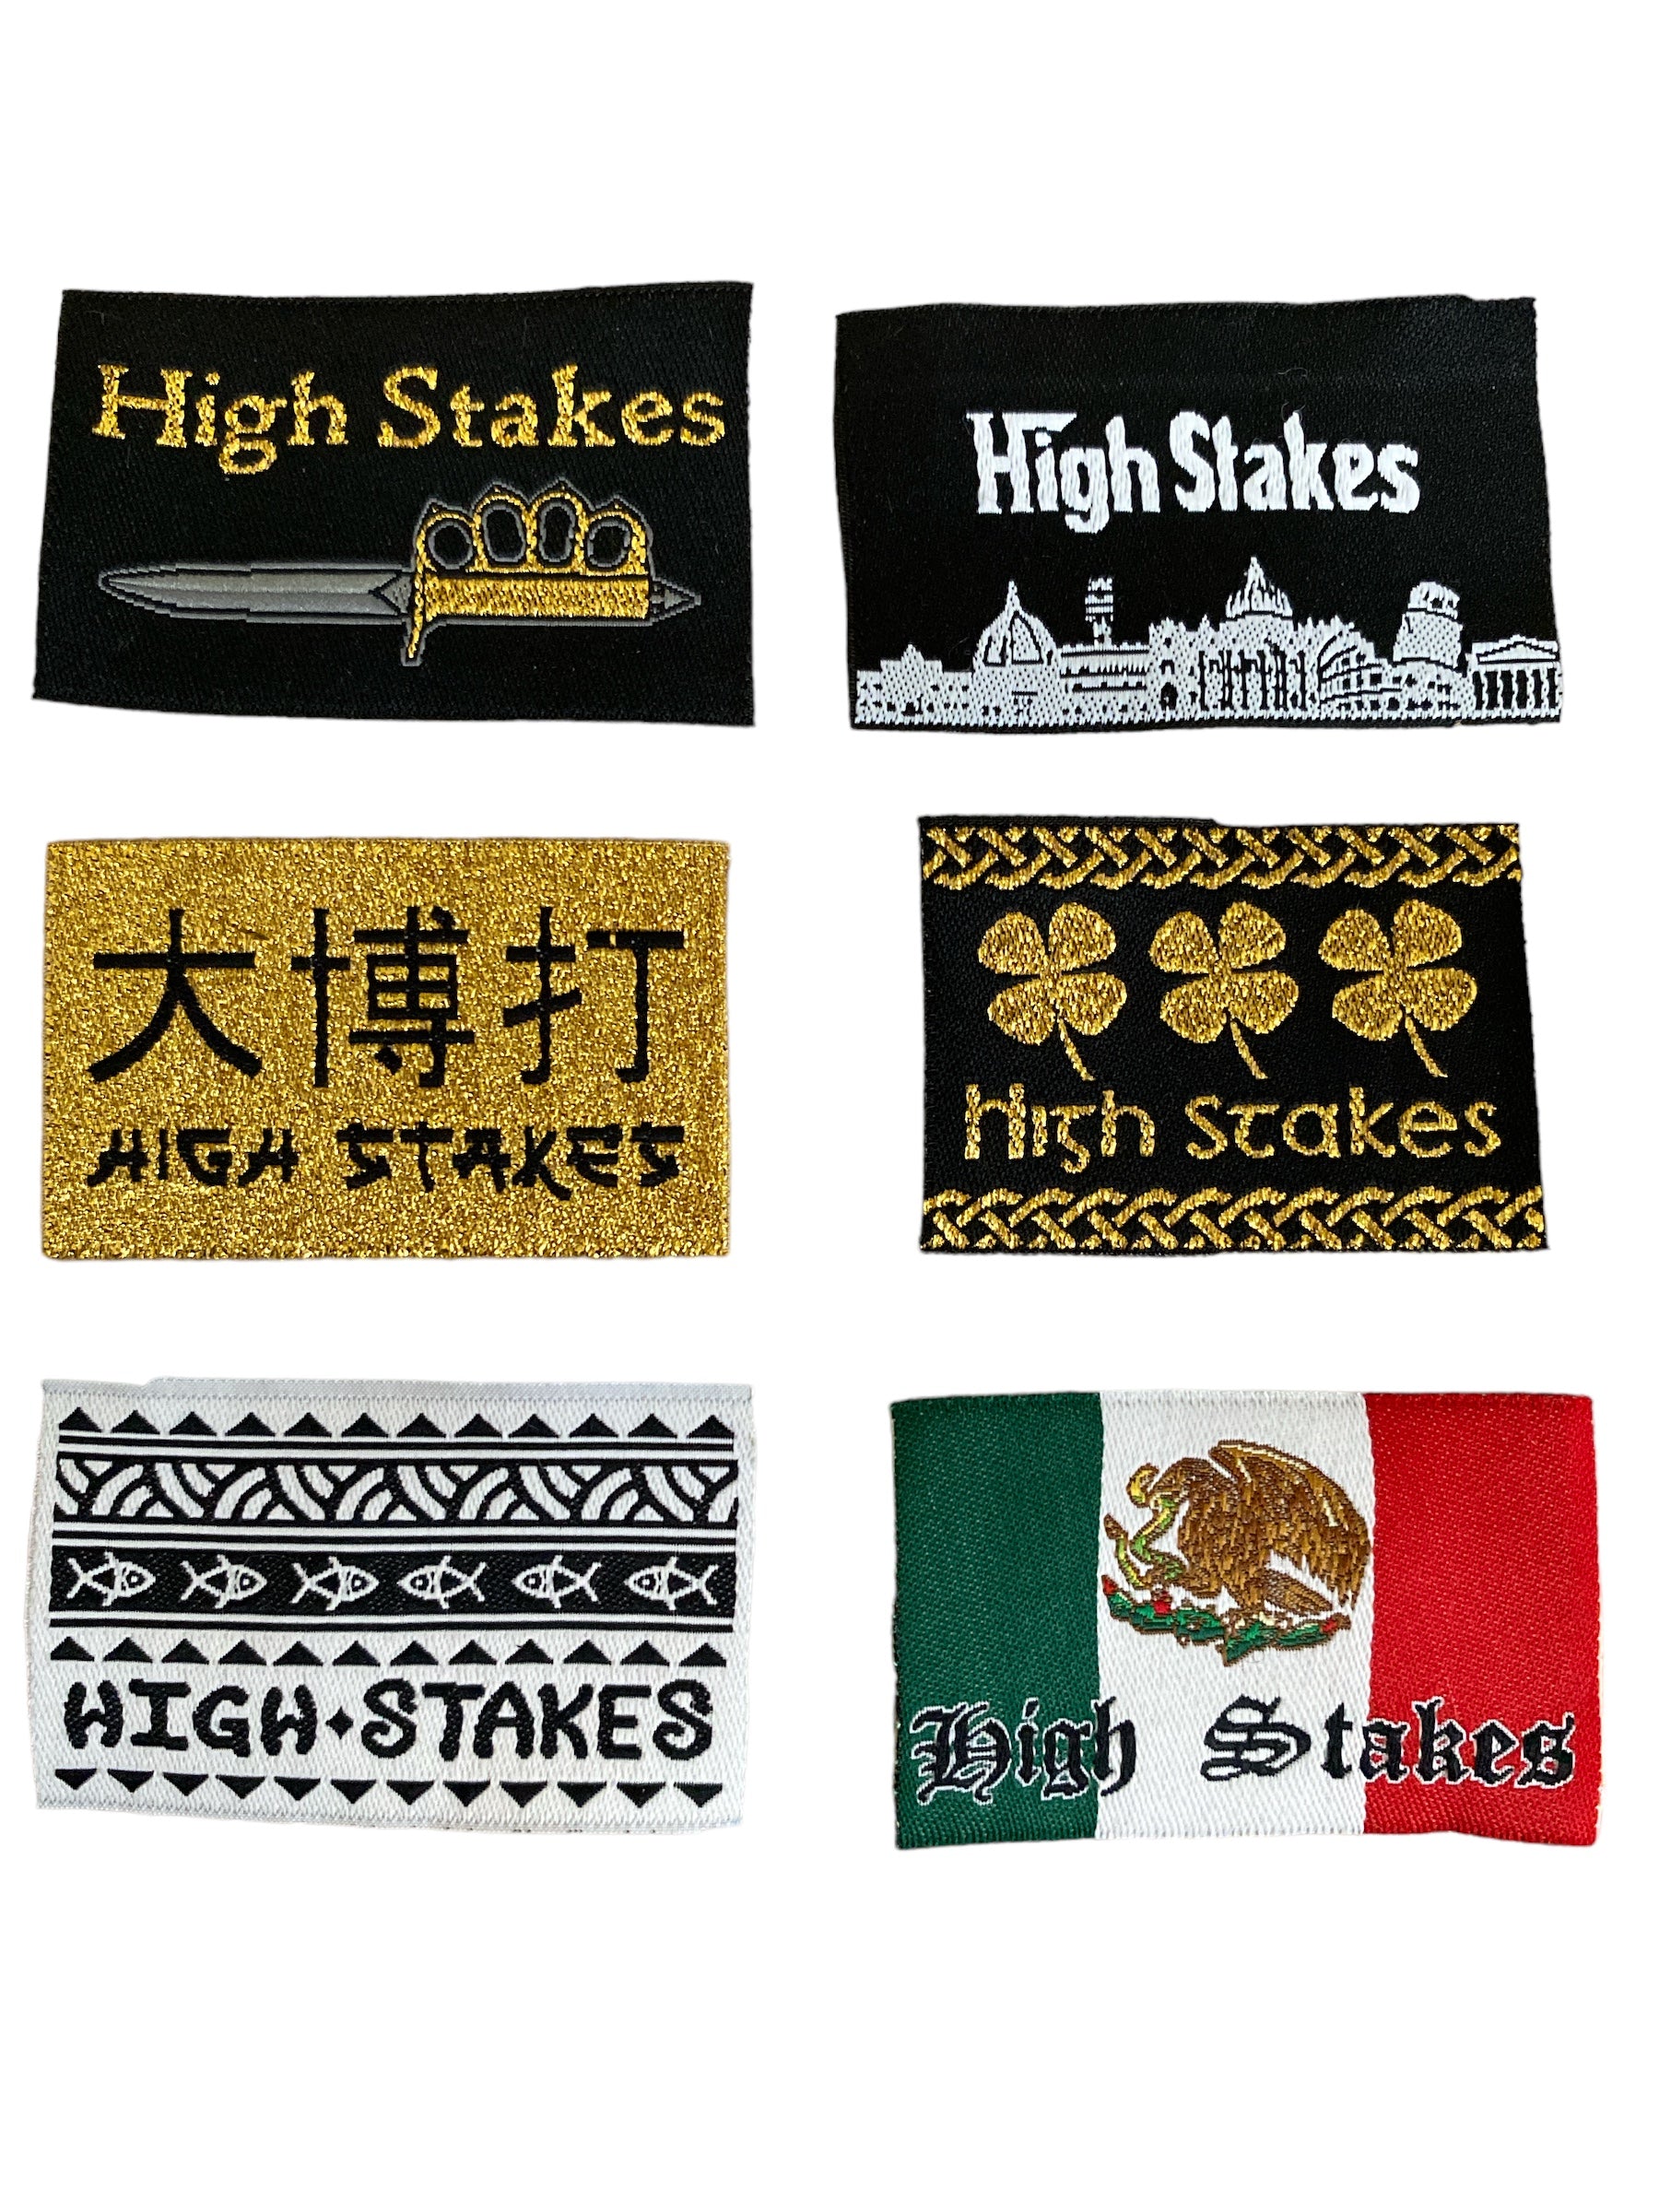 High stakes World tag set – High Stakes PB LLC